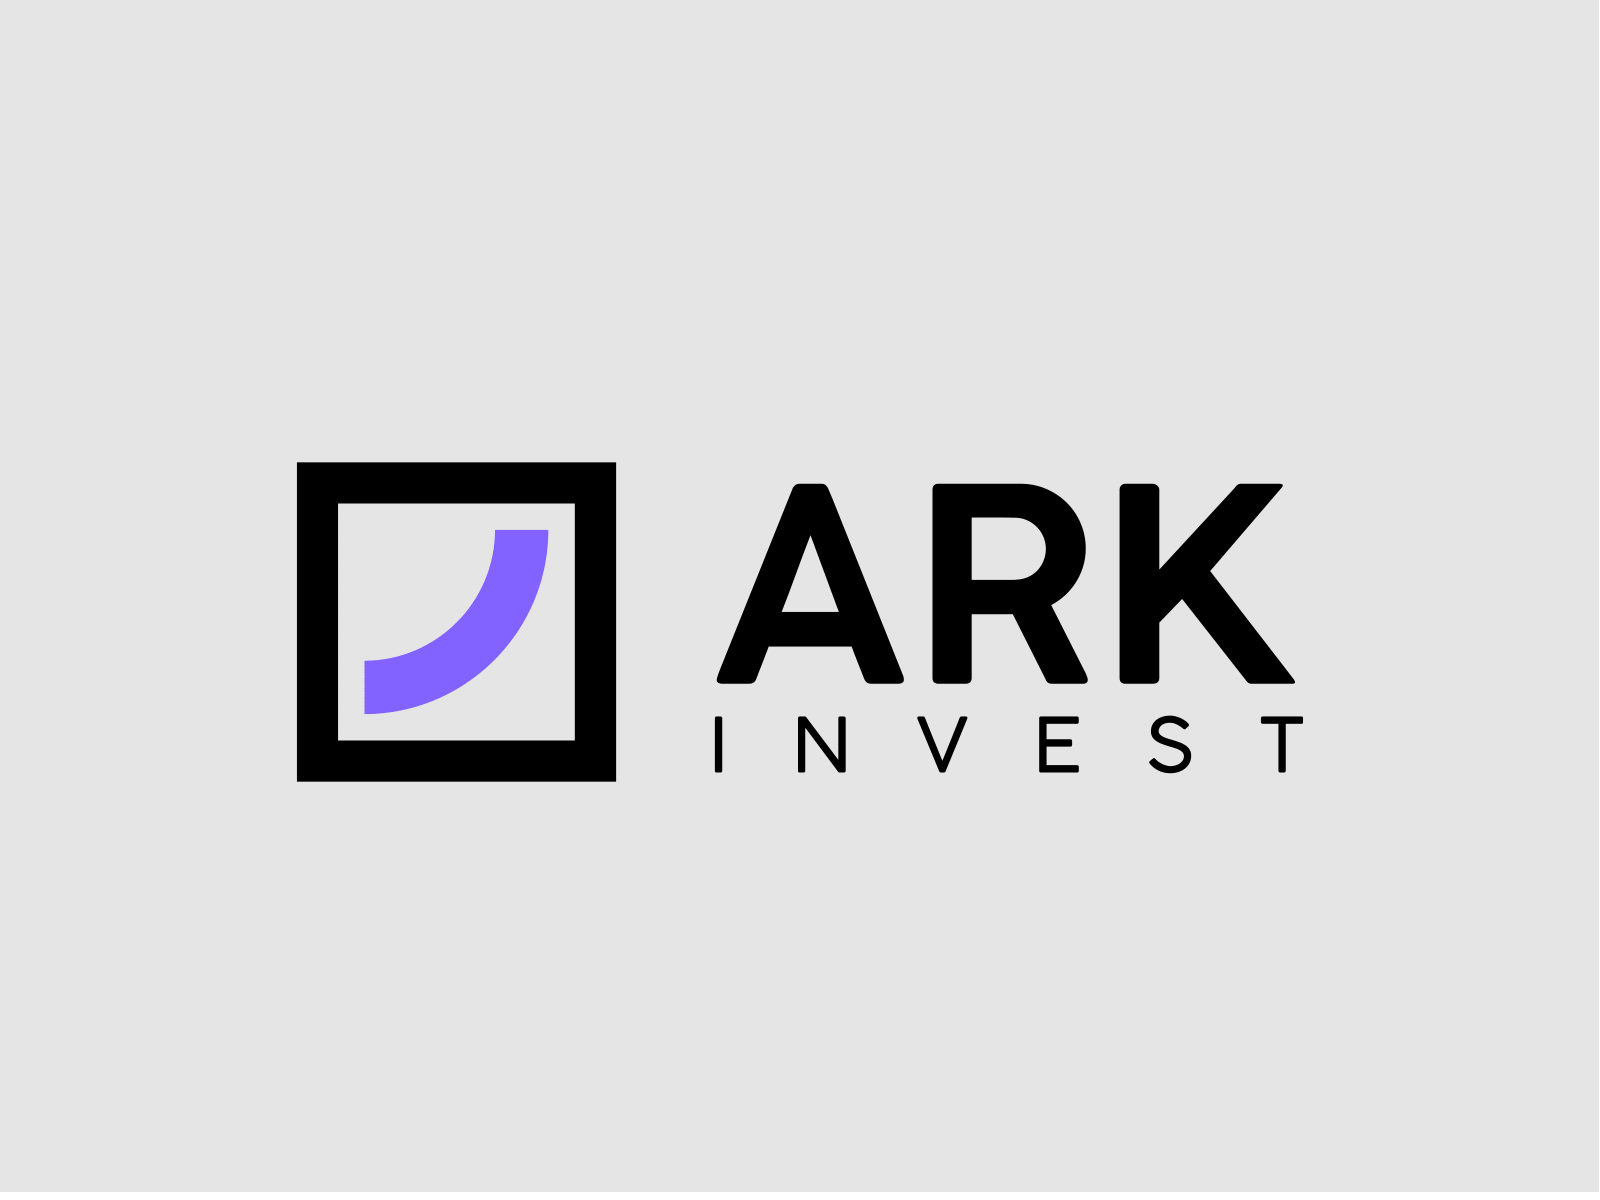 Tv ark. АРК Инвест. Ark логотип. Ark invest PNG. Ark Mebelari logo.